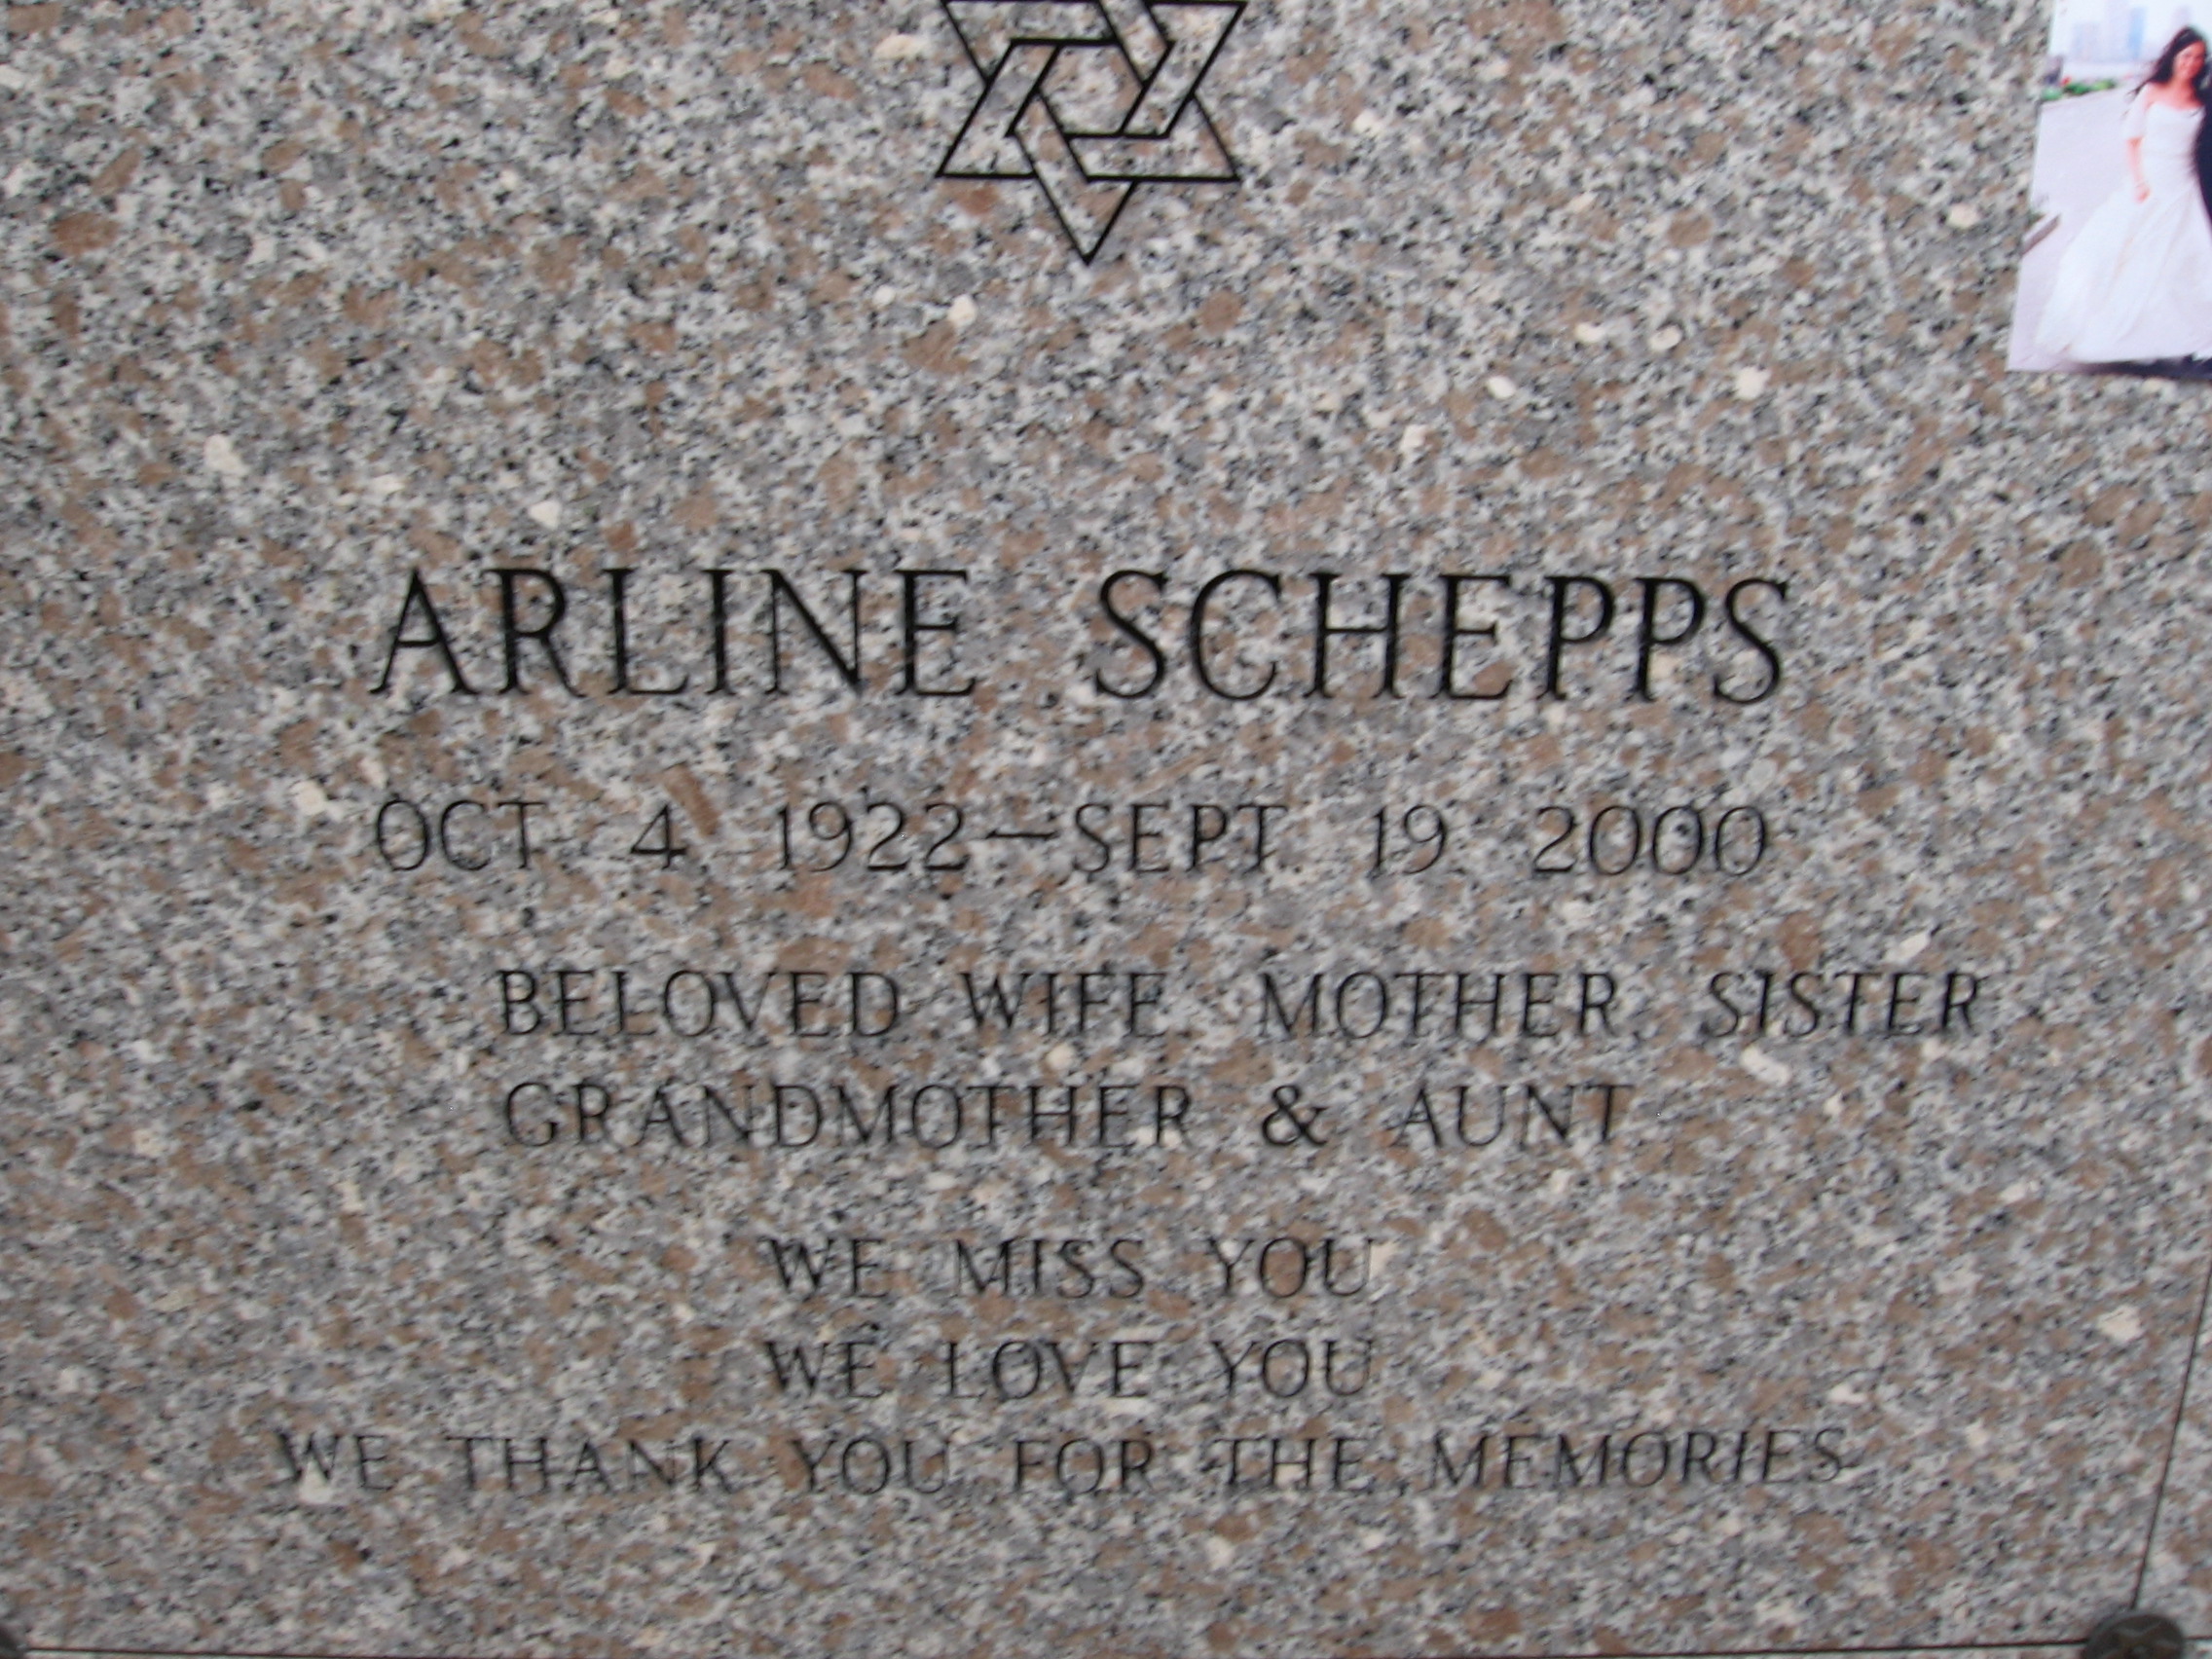 Arline Schepps